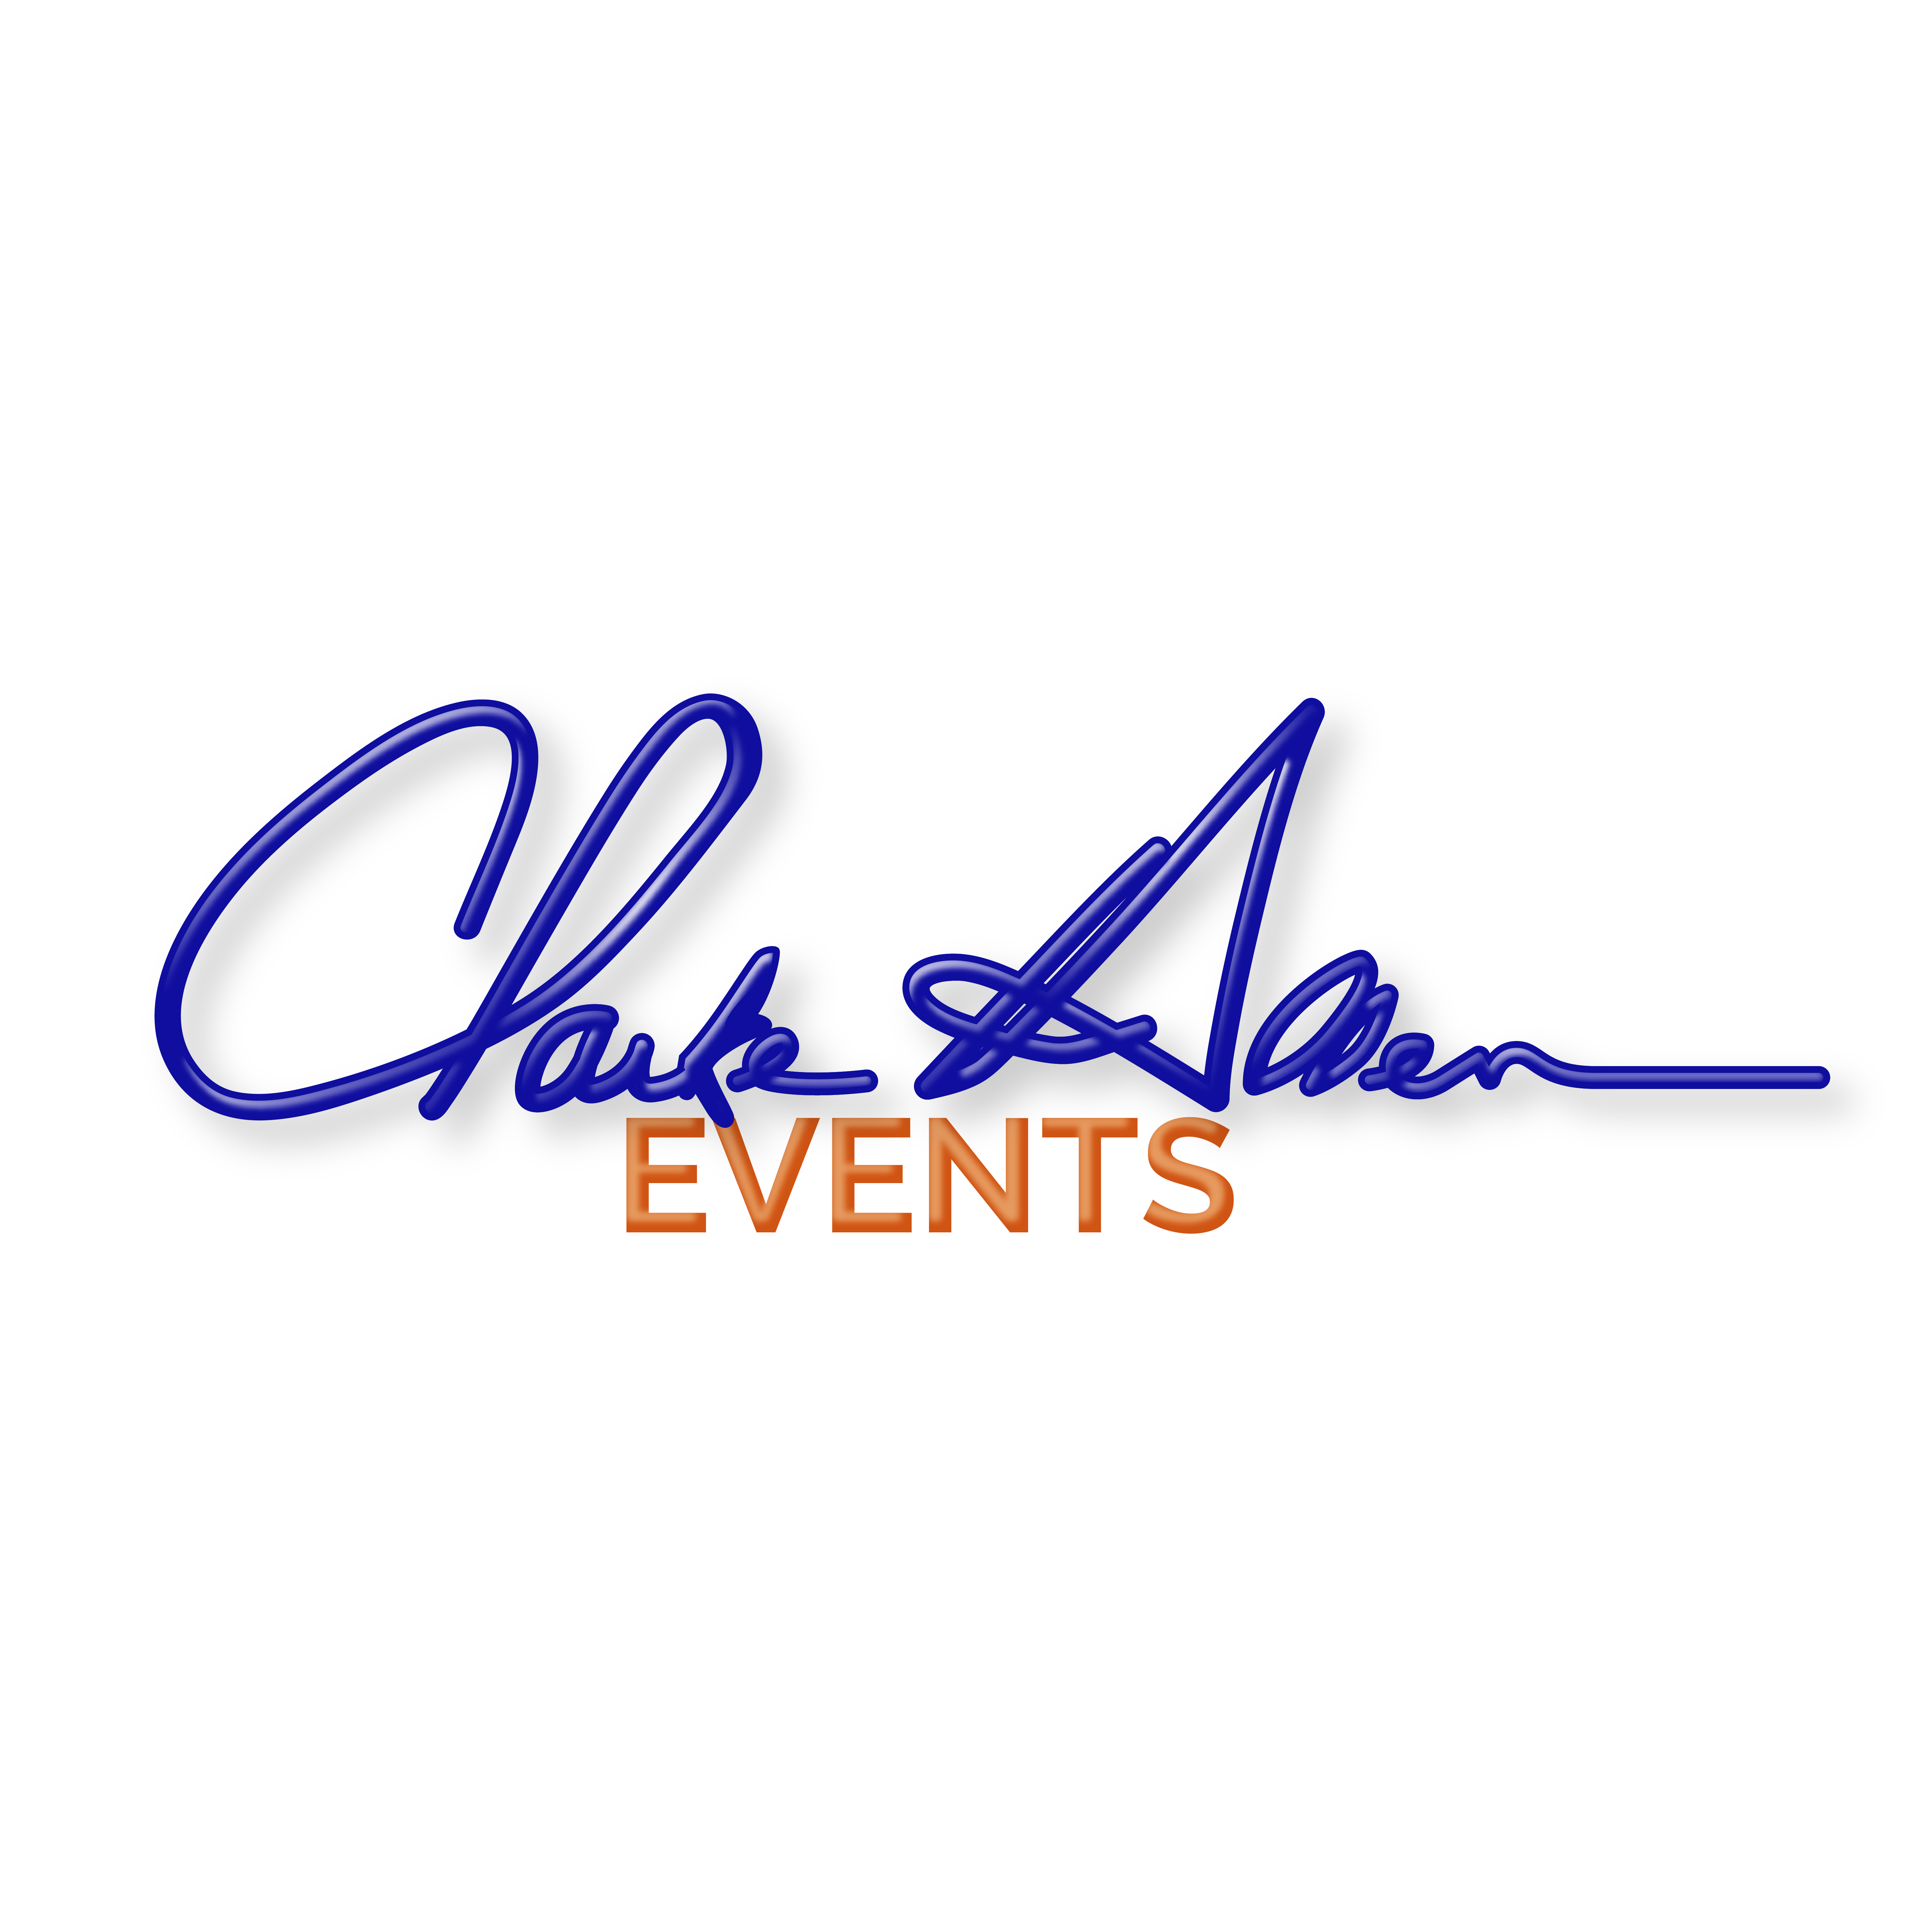 Clarke Allen Events Photo